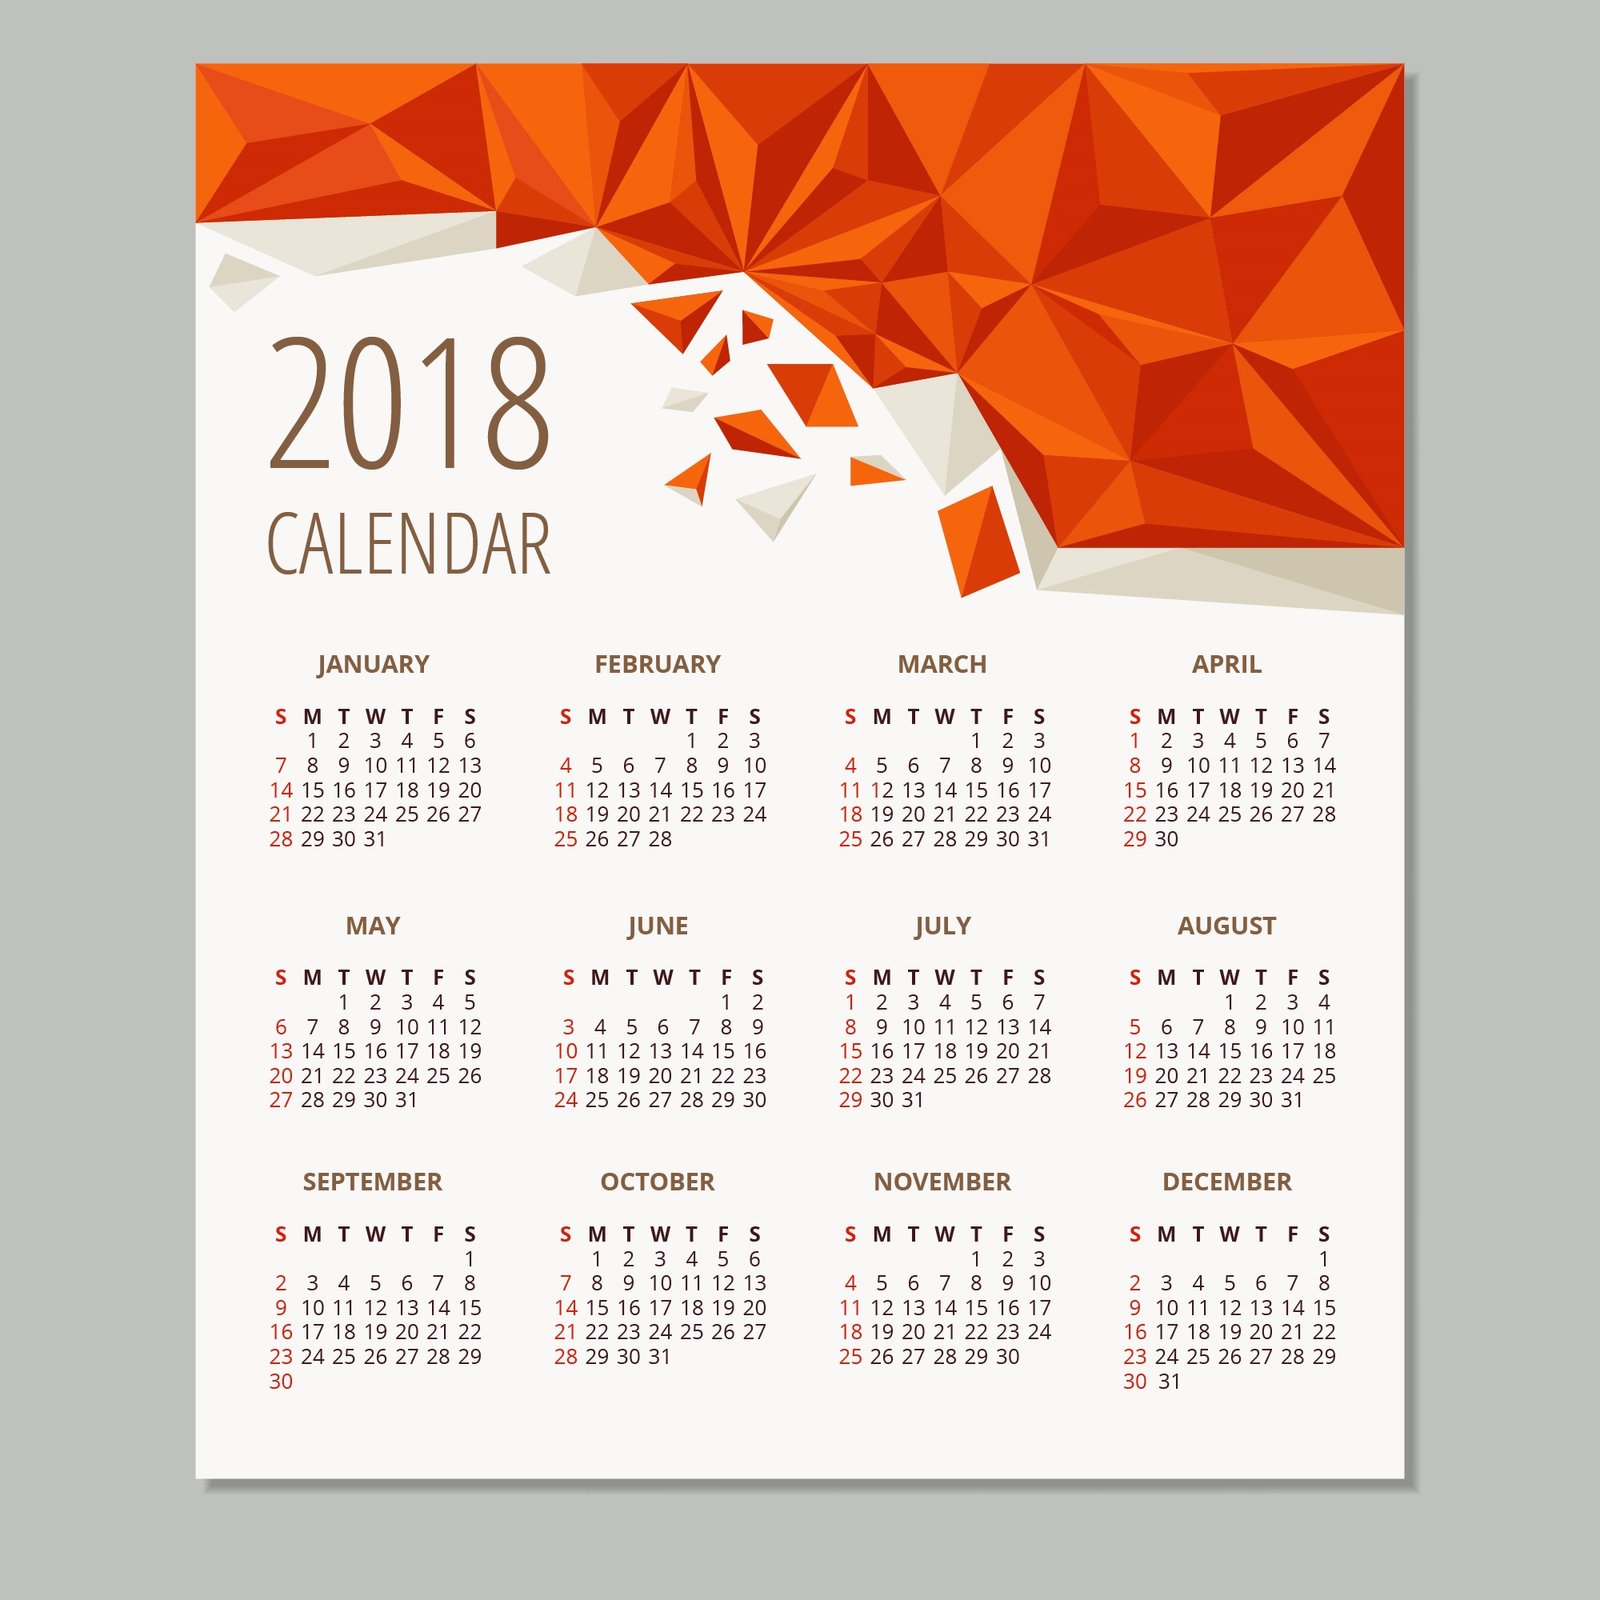 2018 Year Calendar Wallpaper: Download Free 2018 Calendar by Month